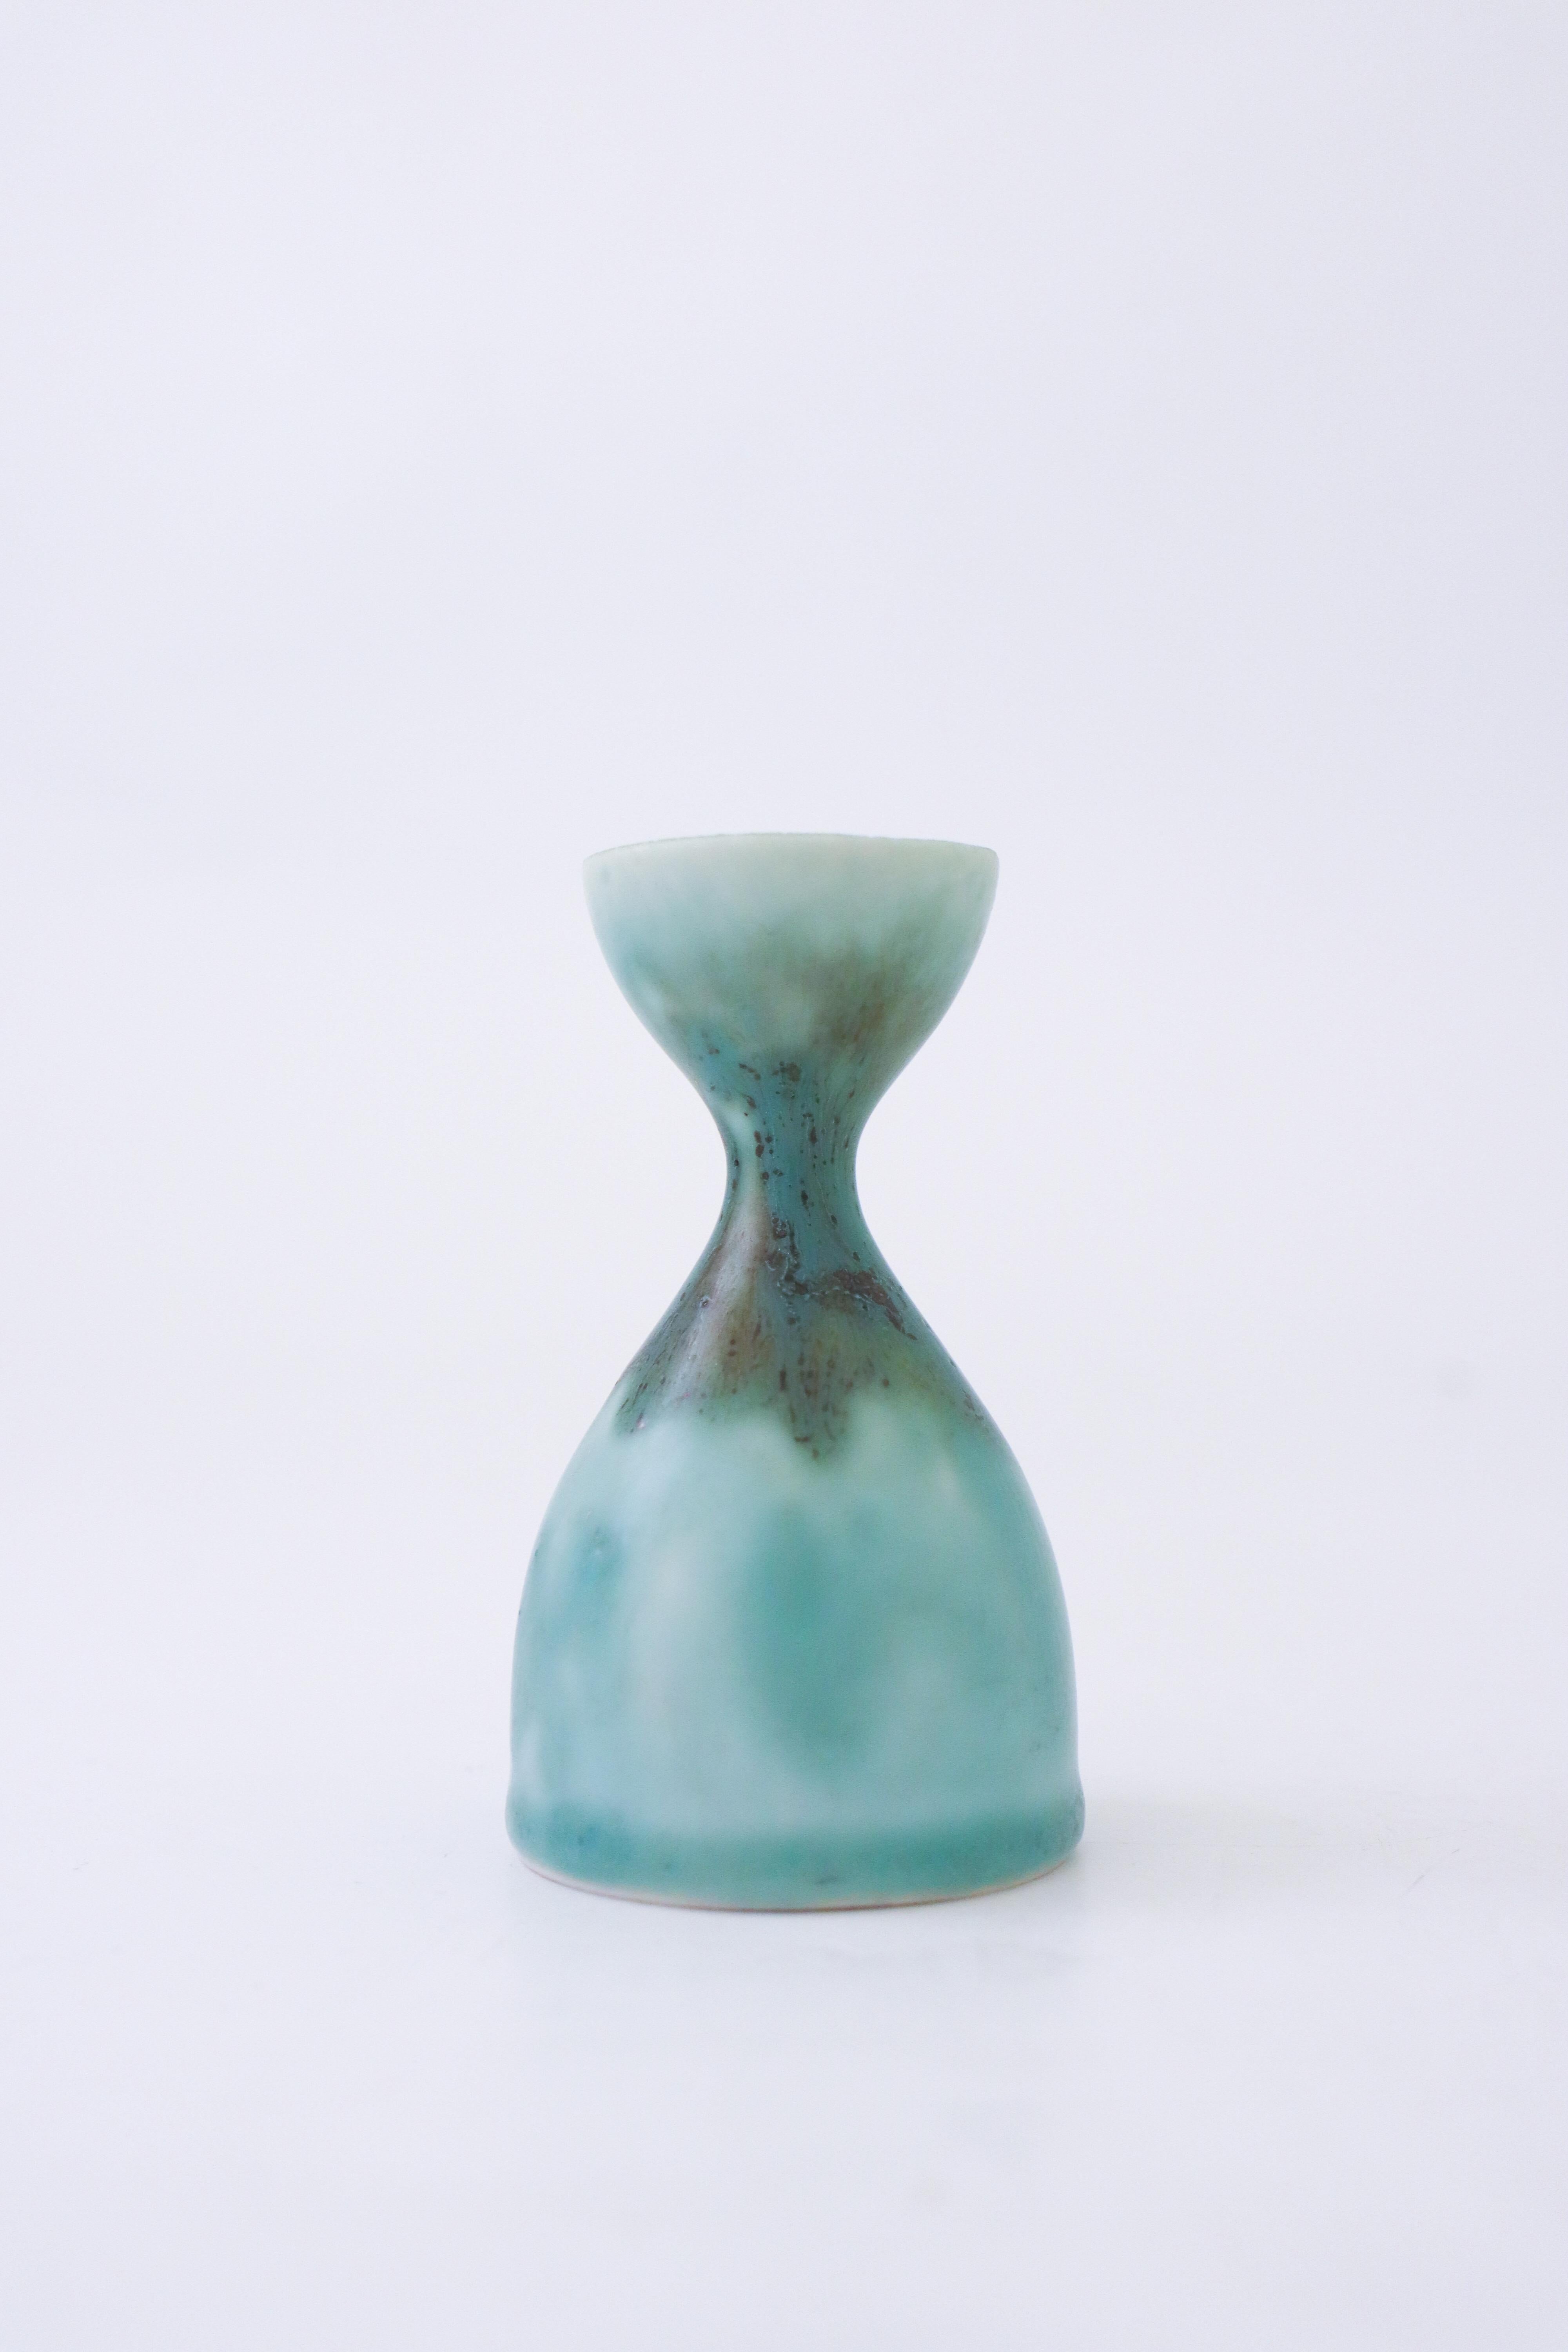 Suédois Vase turquoise, Carl-Harry Stlhane, Rrstrand, années 1950